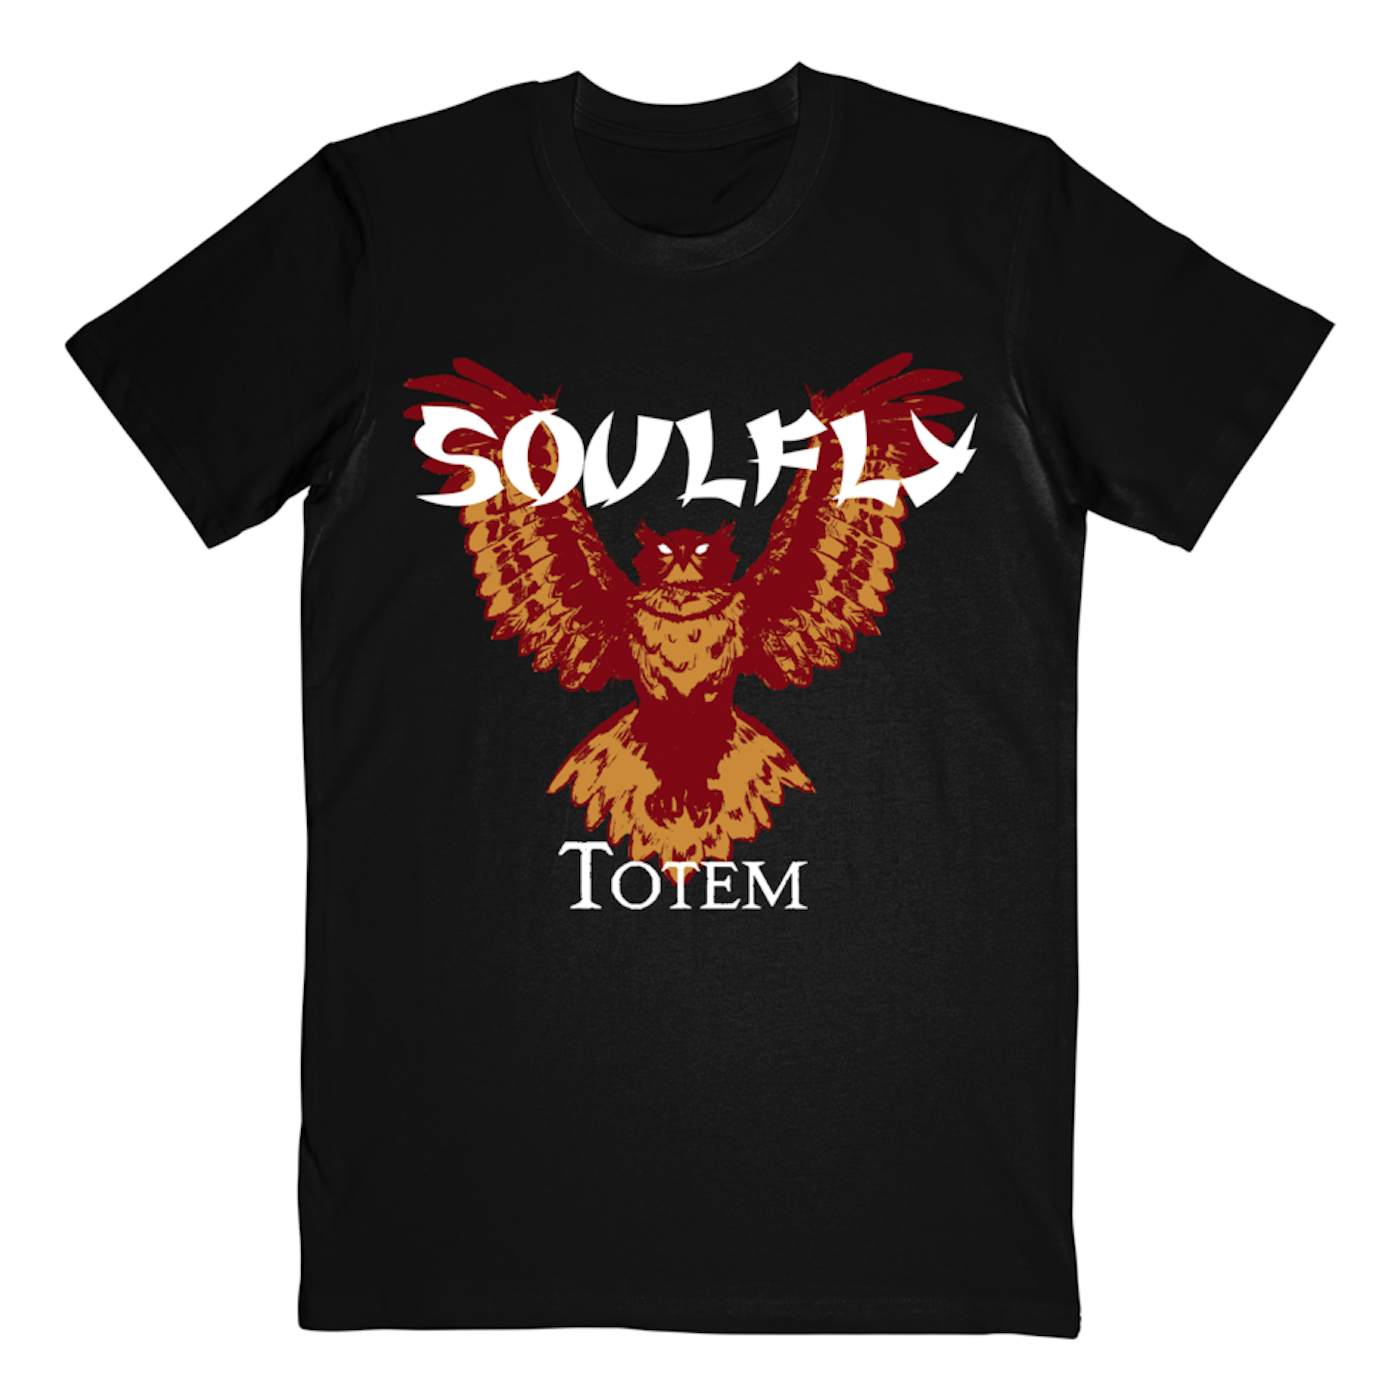 Soulfly "Totem" T-Shirt